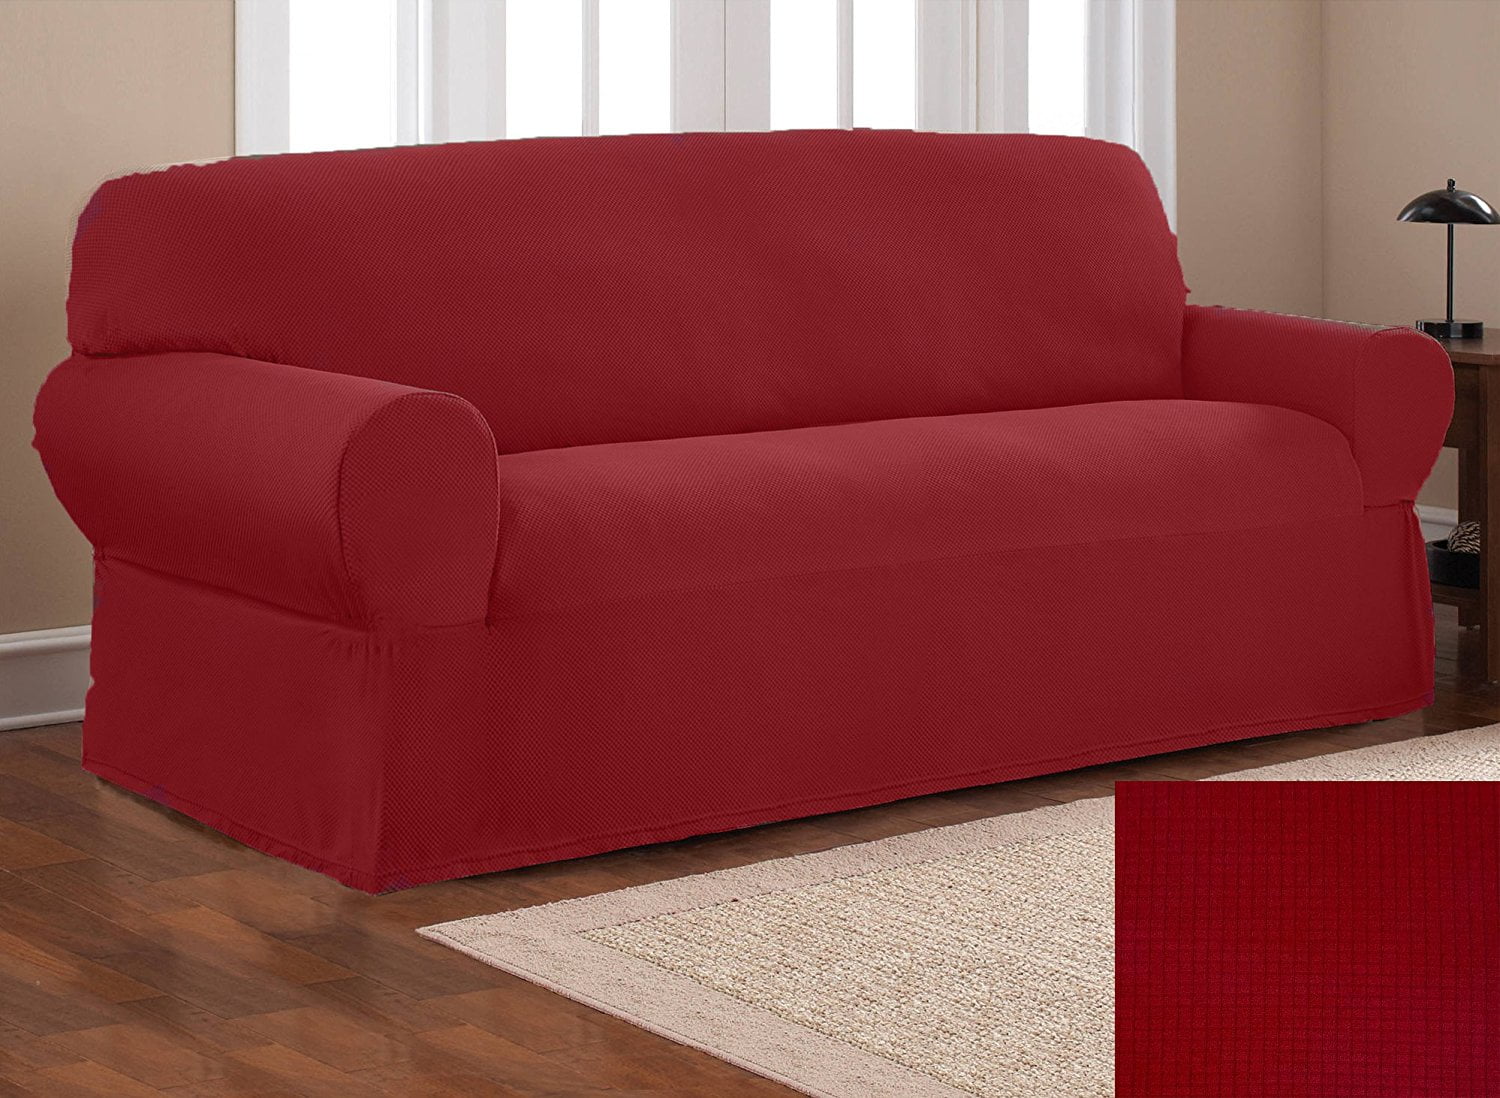 surefit sofa bed slipcover with zipper